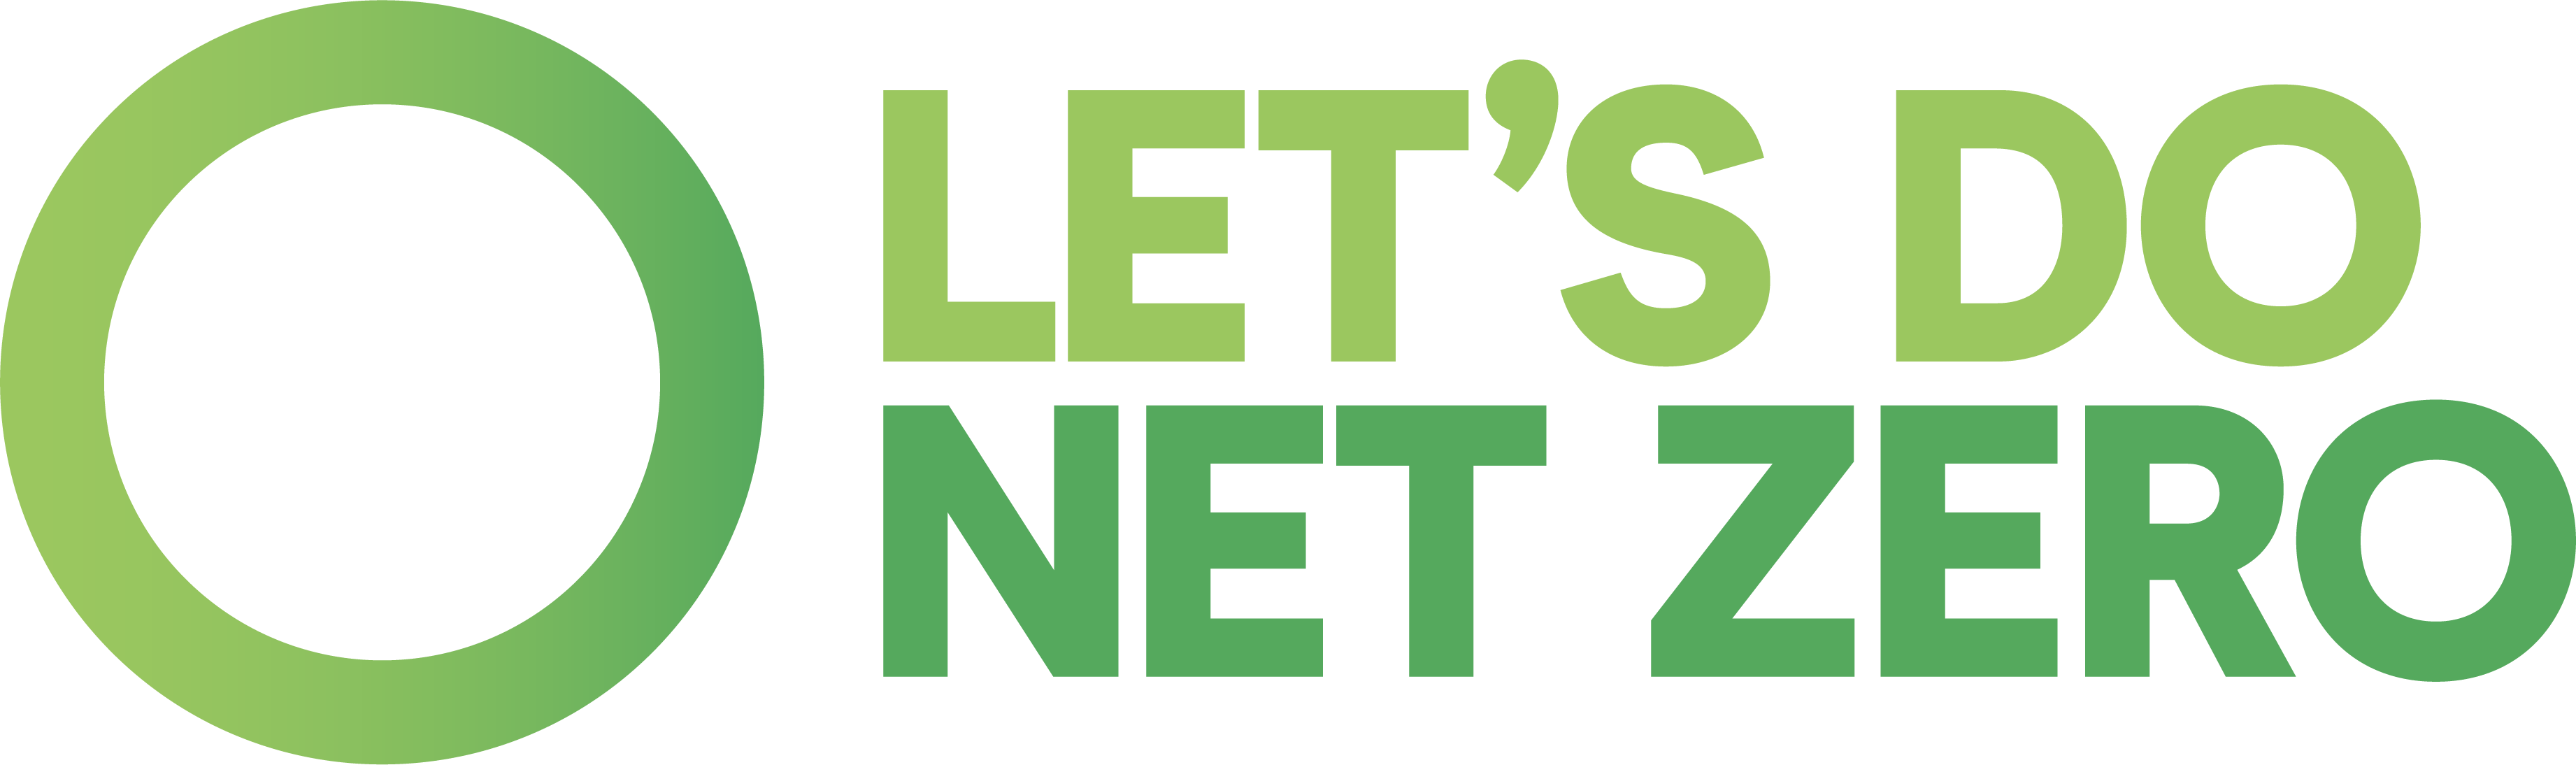 Let's do net zero logo